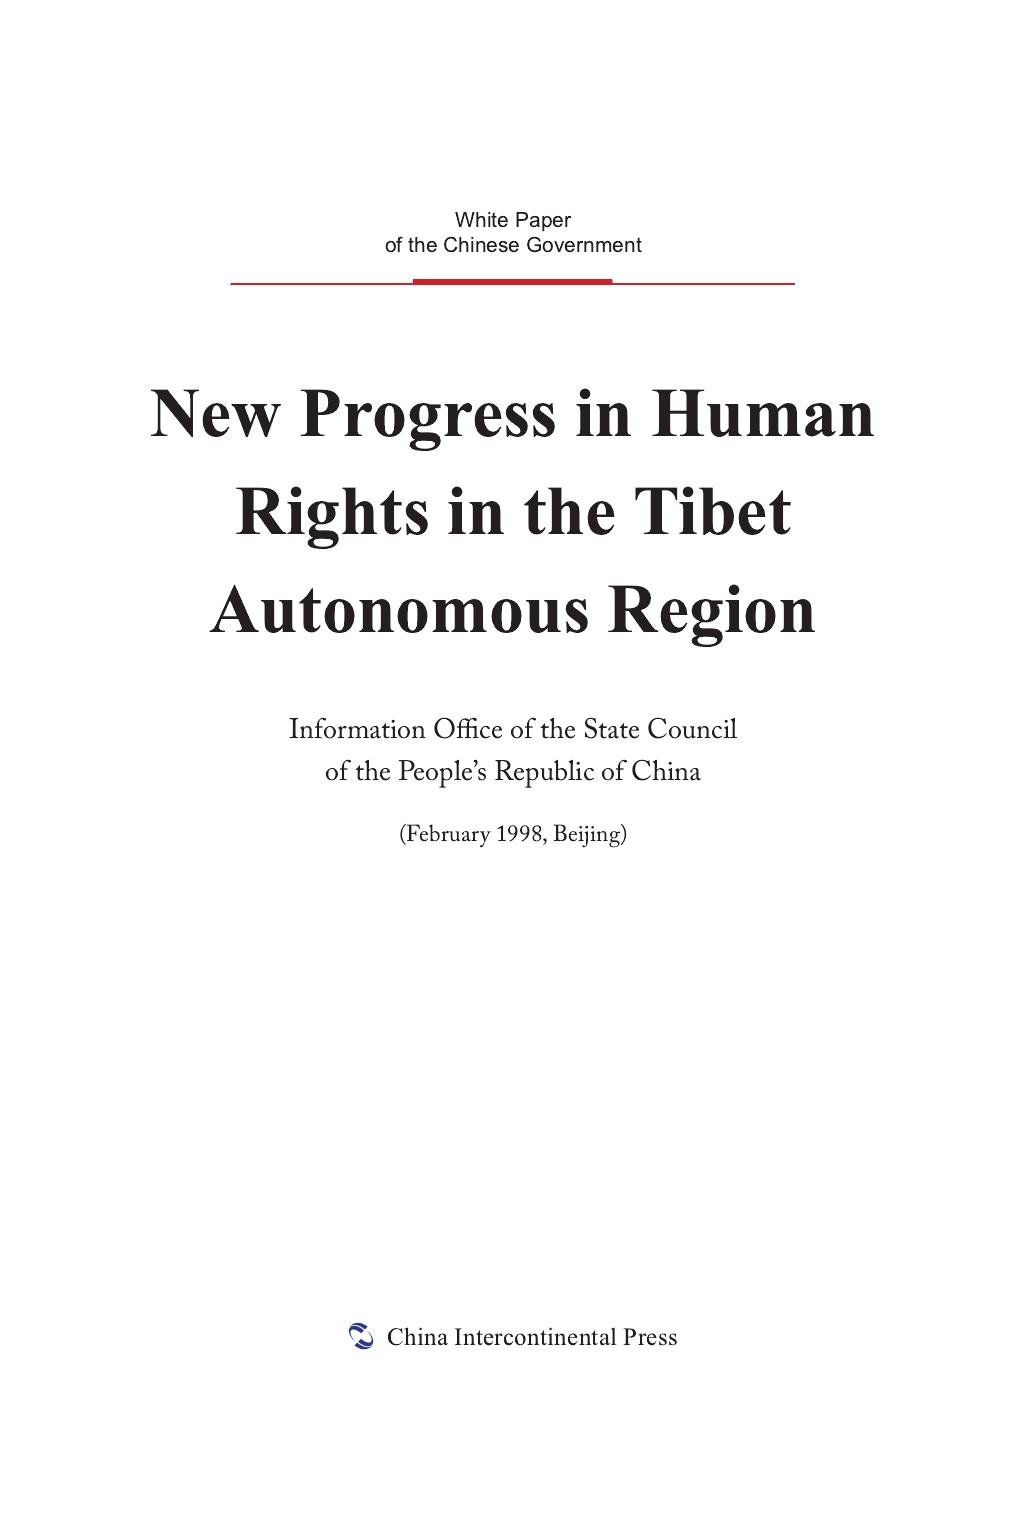 New Progress in Human Rights in the Tibet Autonomous Region